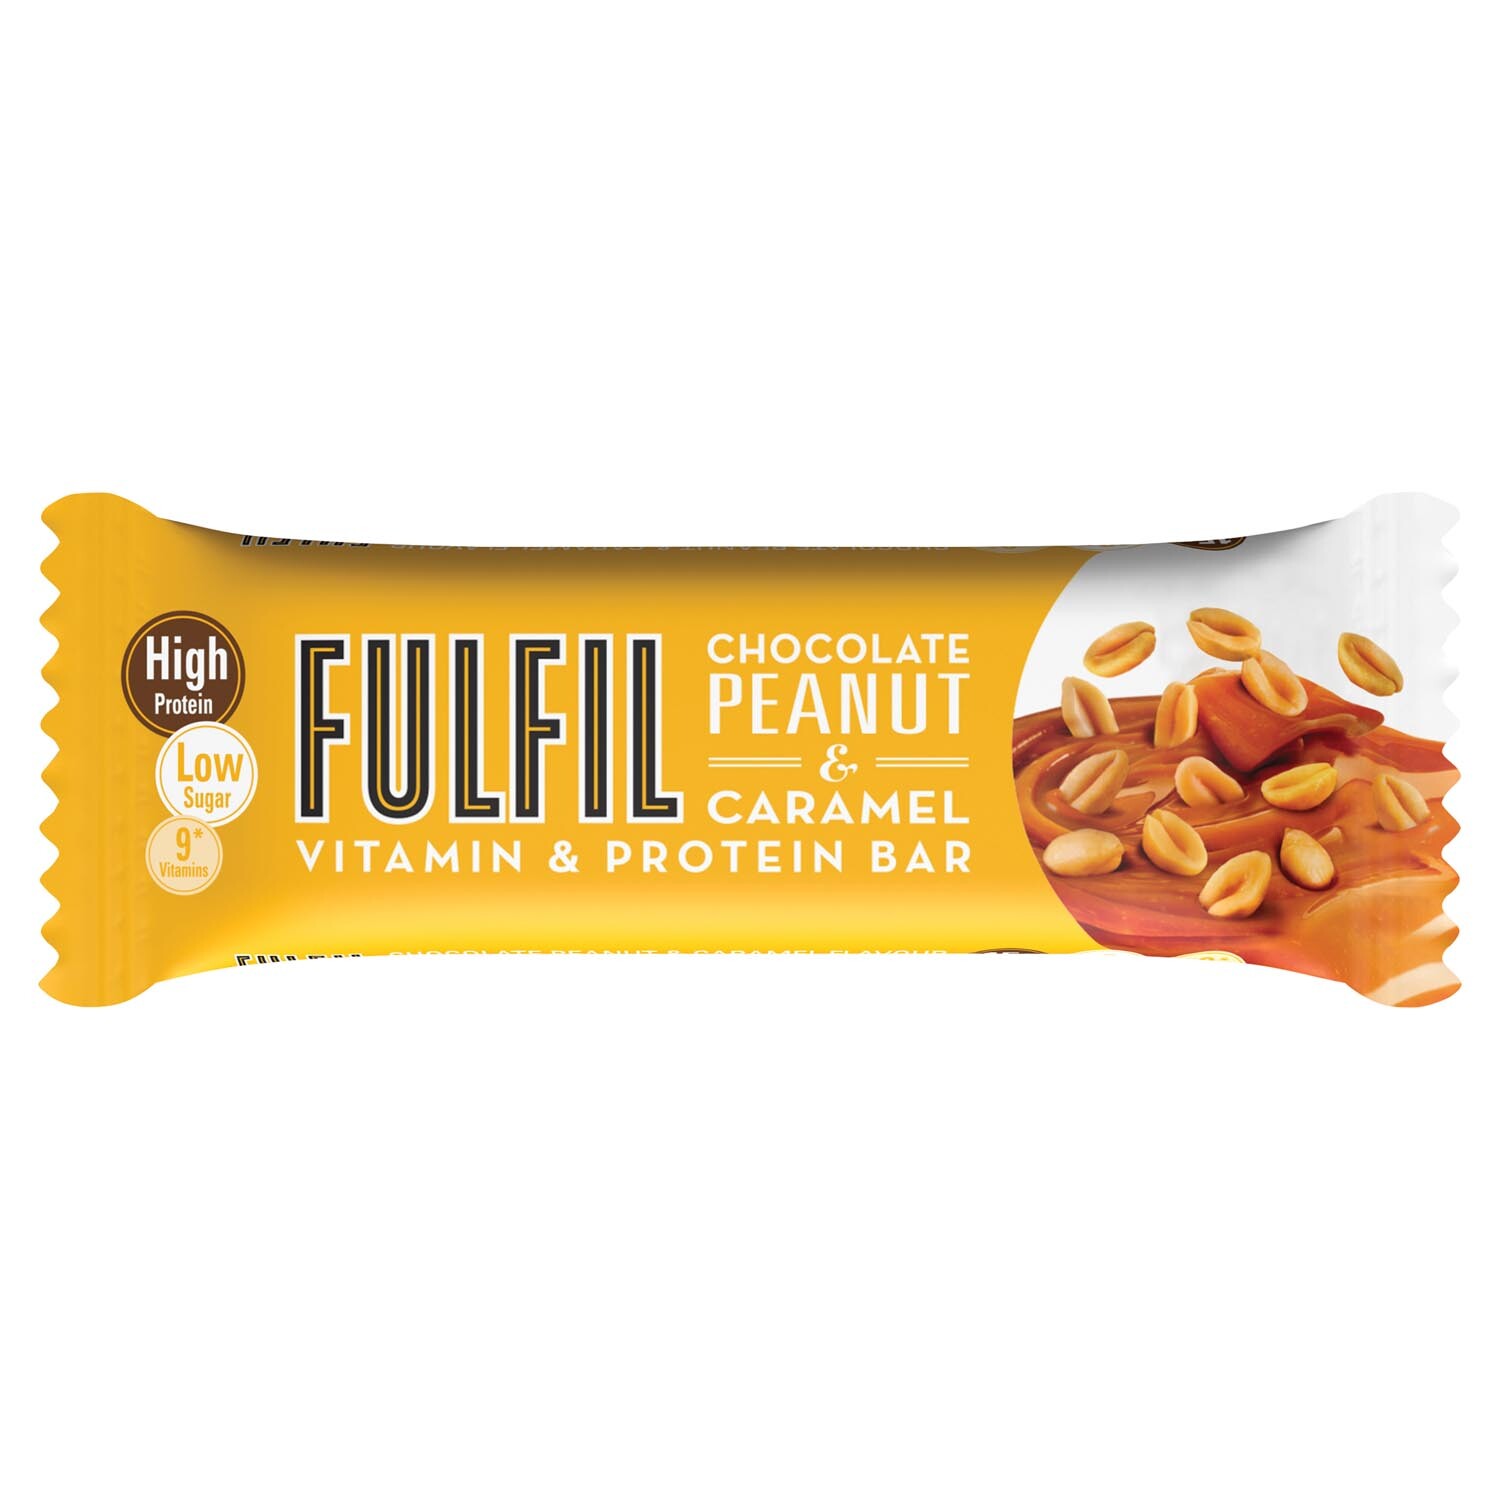 Fulfil Vitamin and Protein Bar - Chocolate Peanut and Caramel Image 1